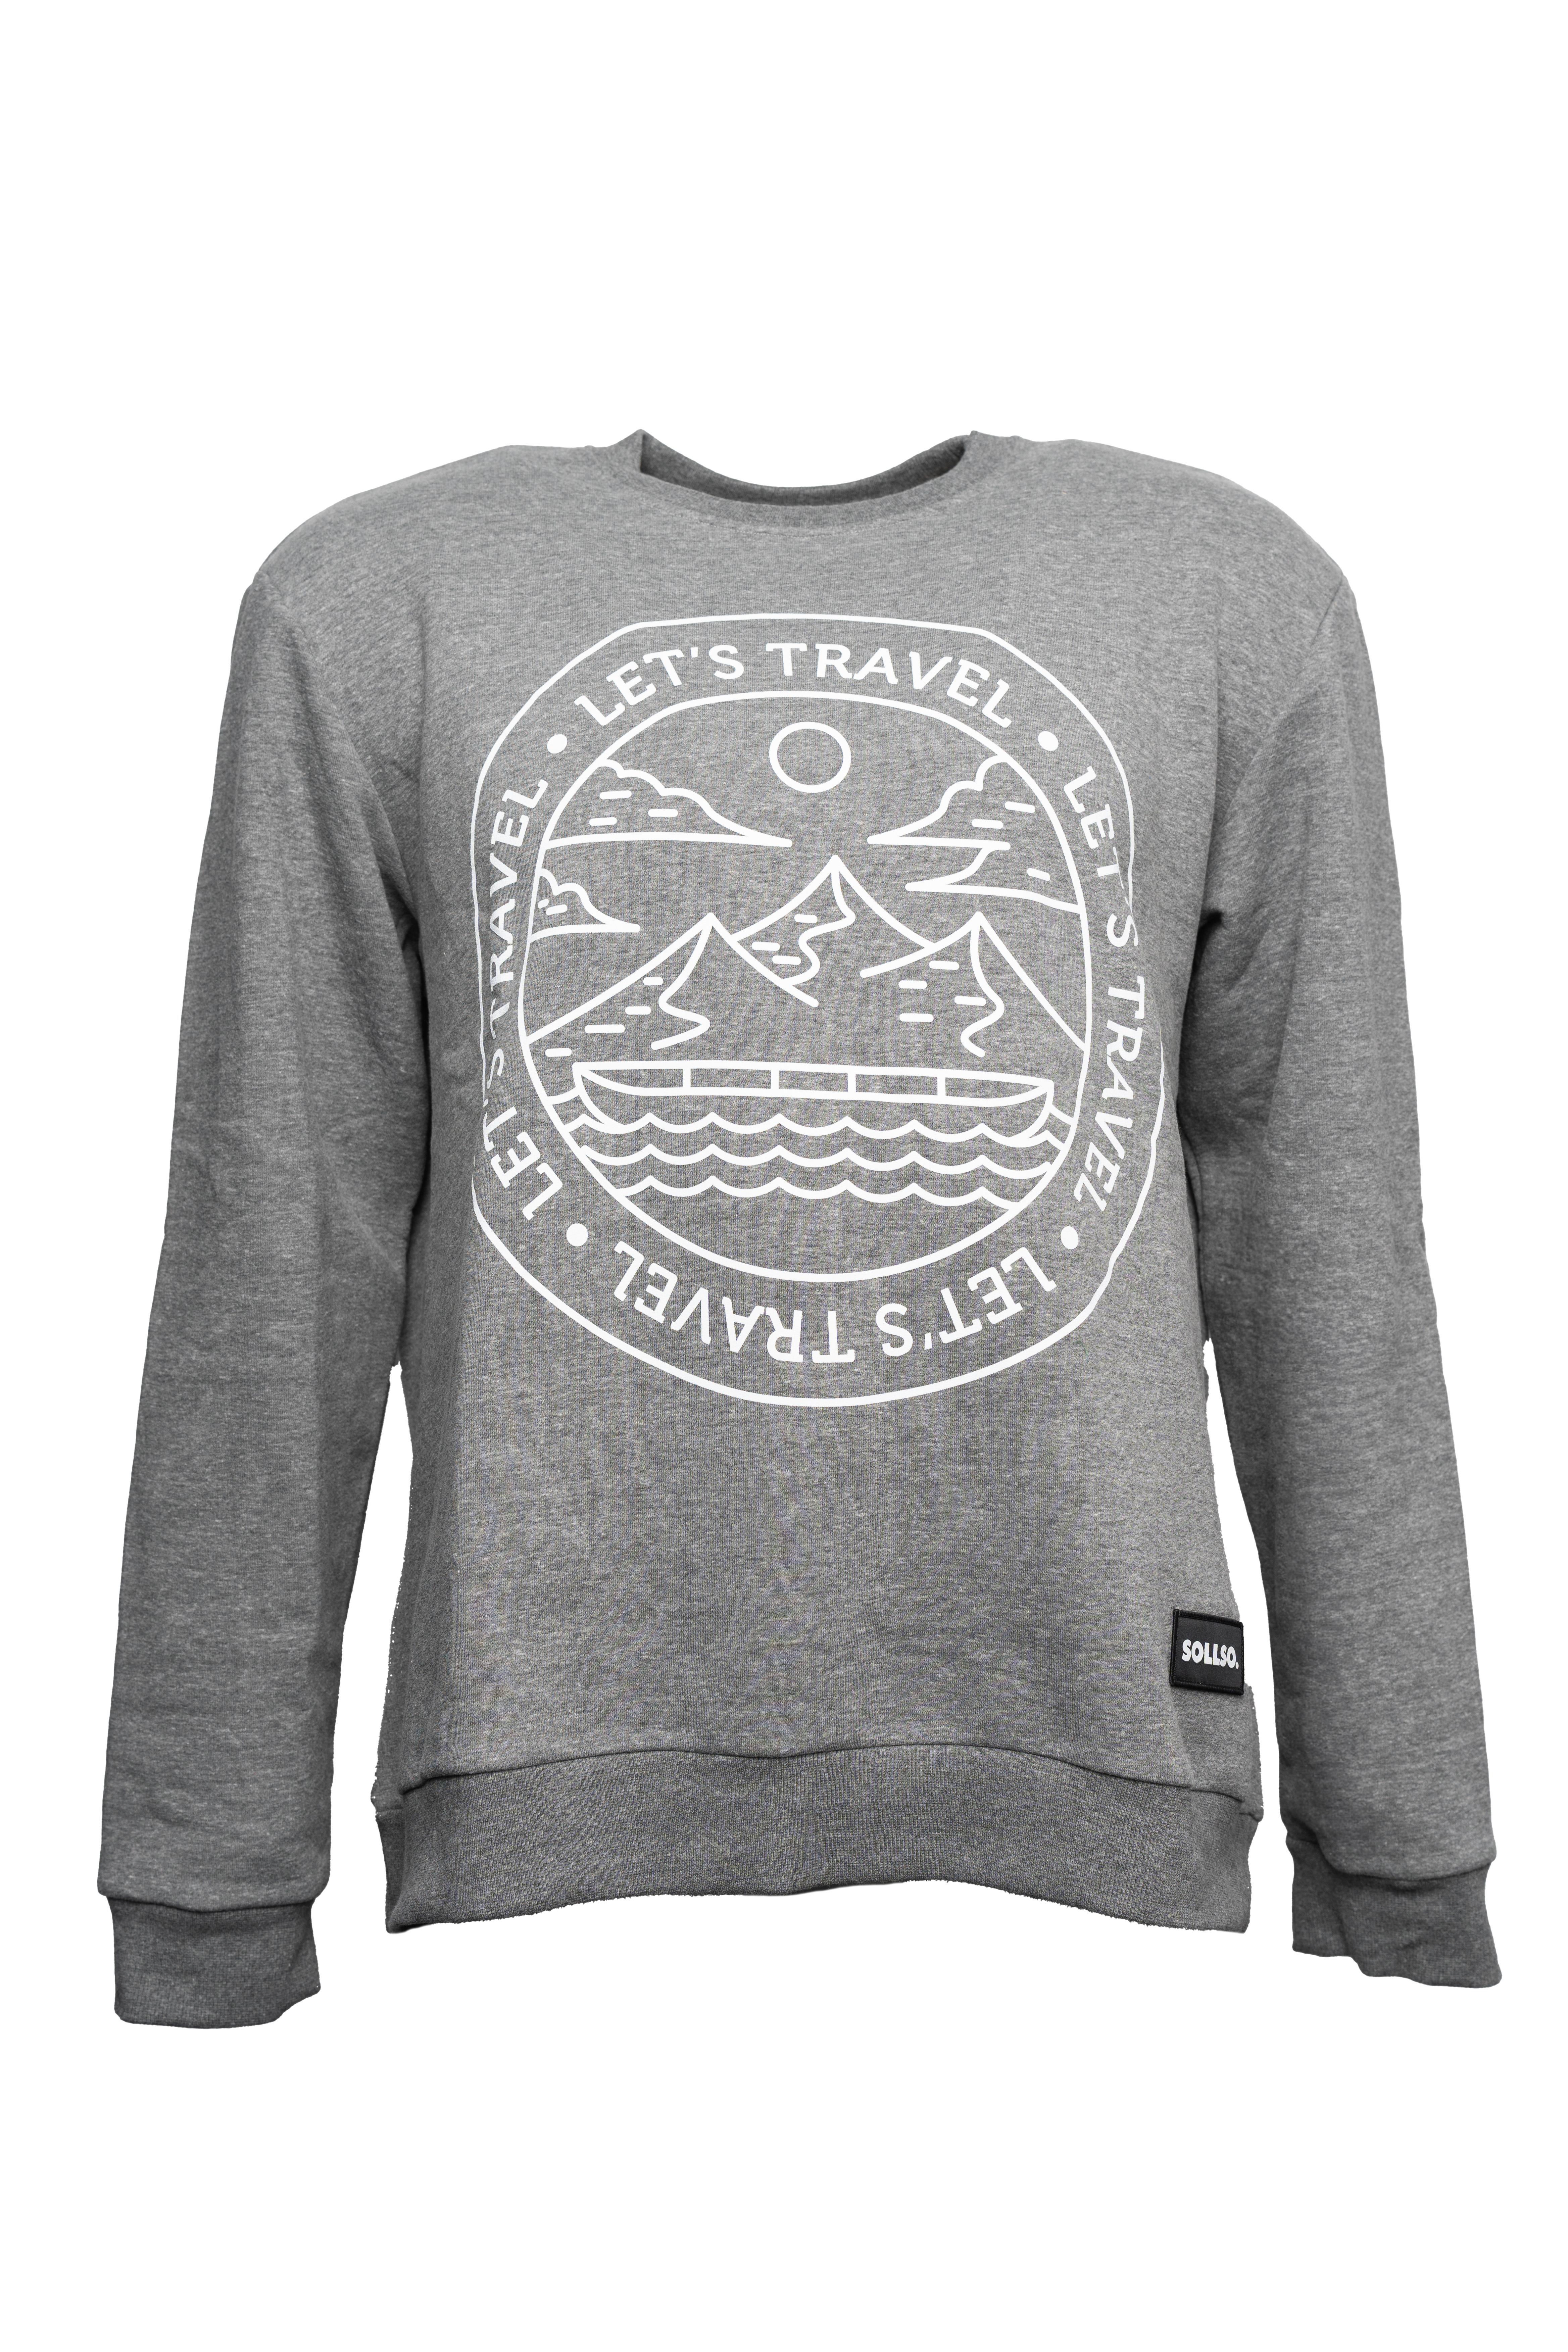 SOLLSO. Sweatshirt „Let’s Travel“, Farbe Pepper & Salt, Größe 9XL